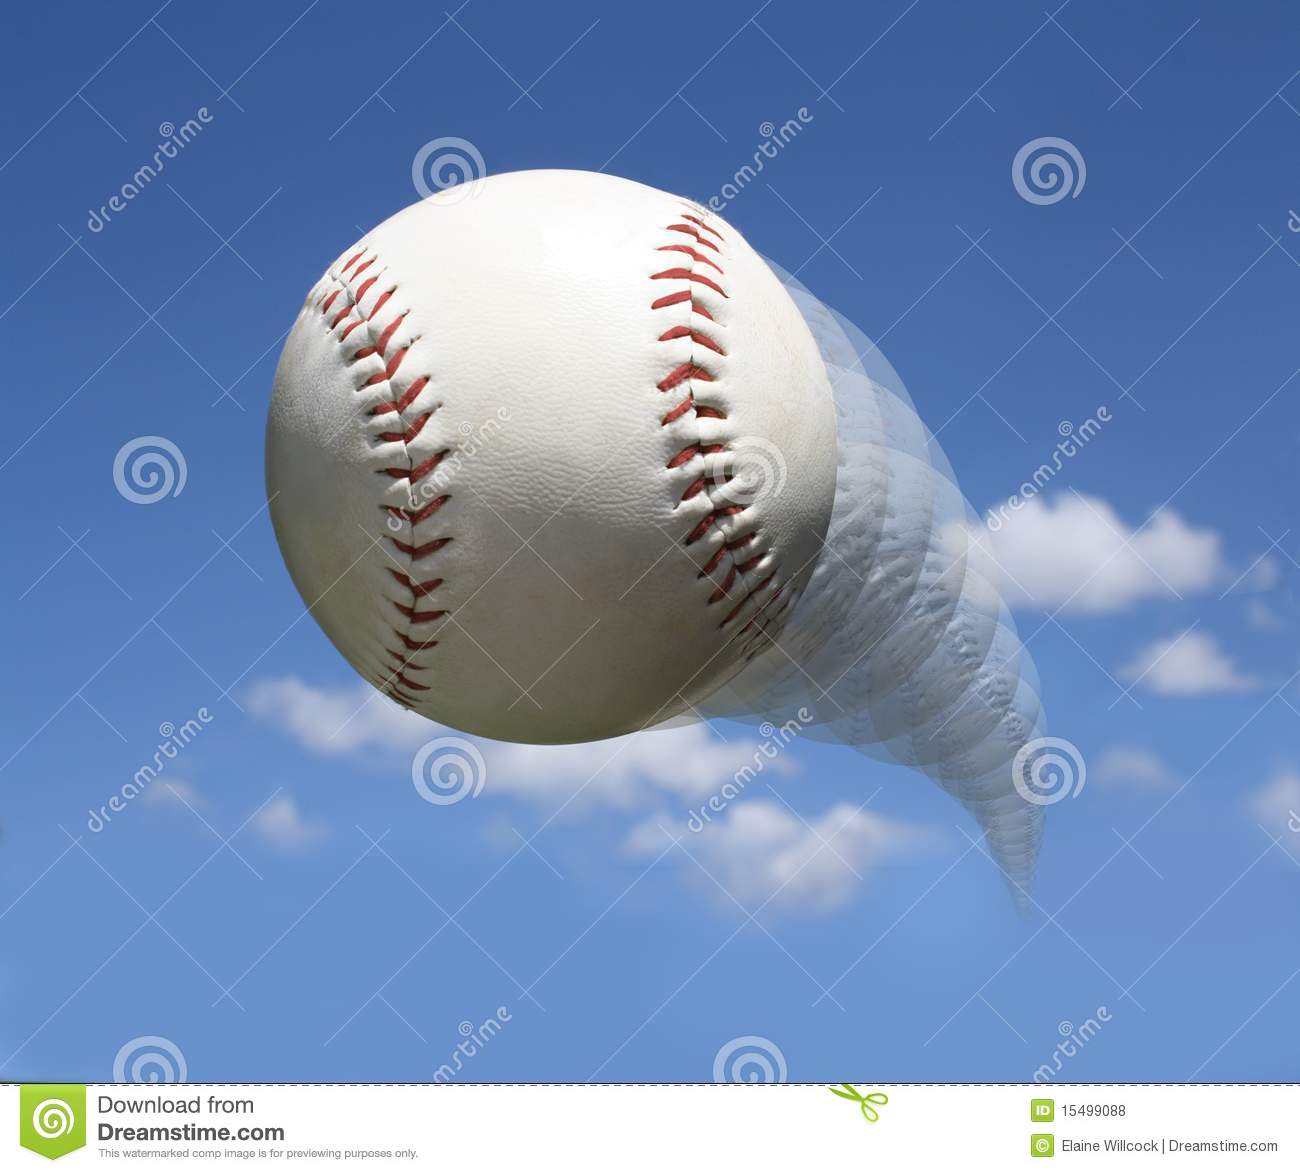 Closeup Of A Baseball Being Thrown In The Air Against A Blue Sky 